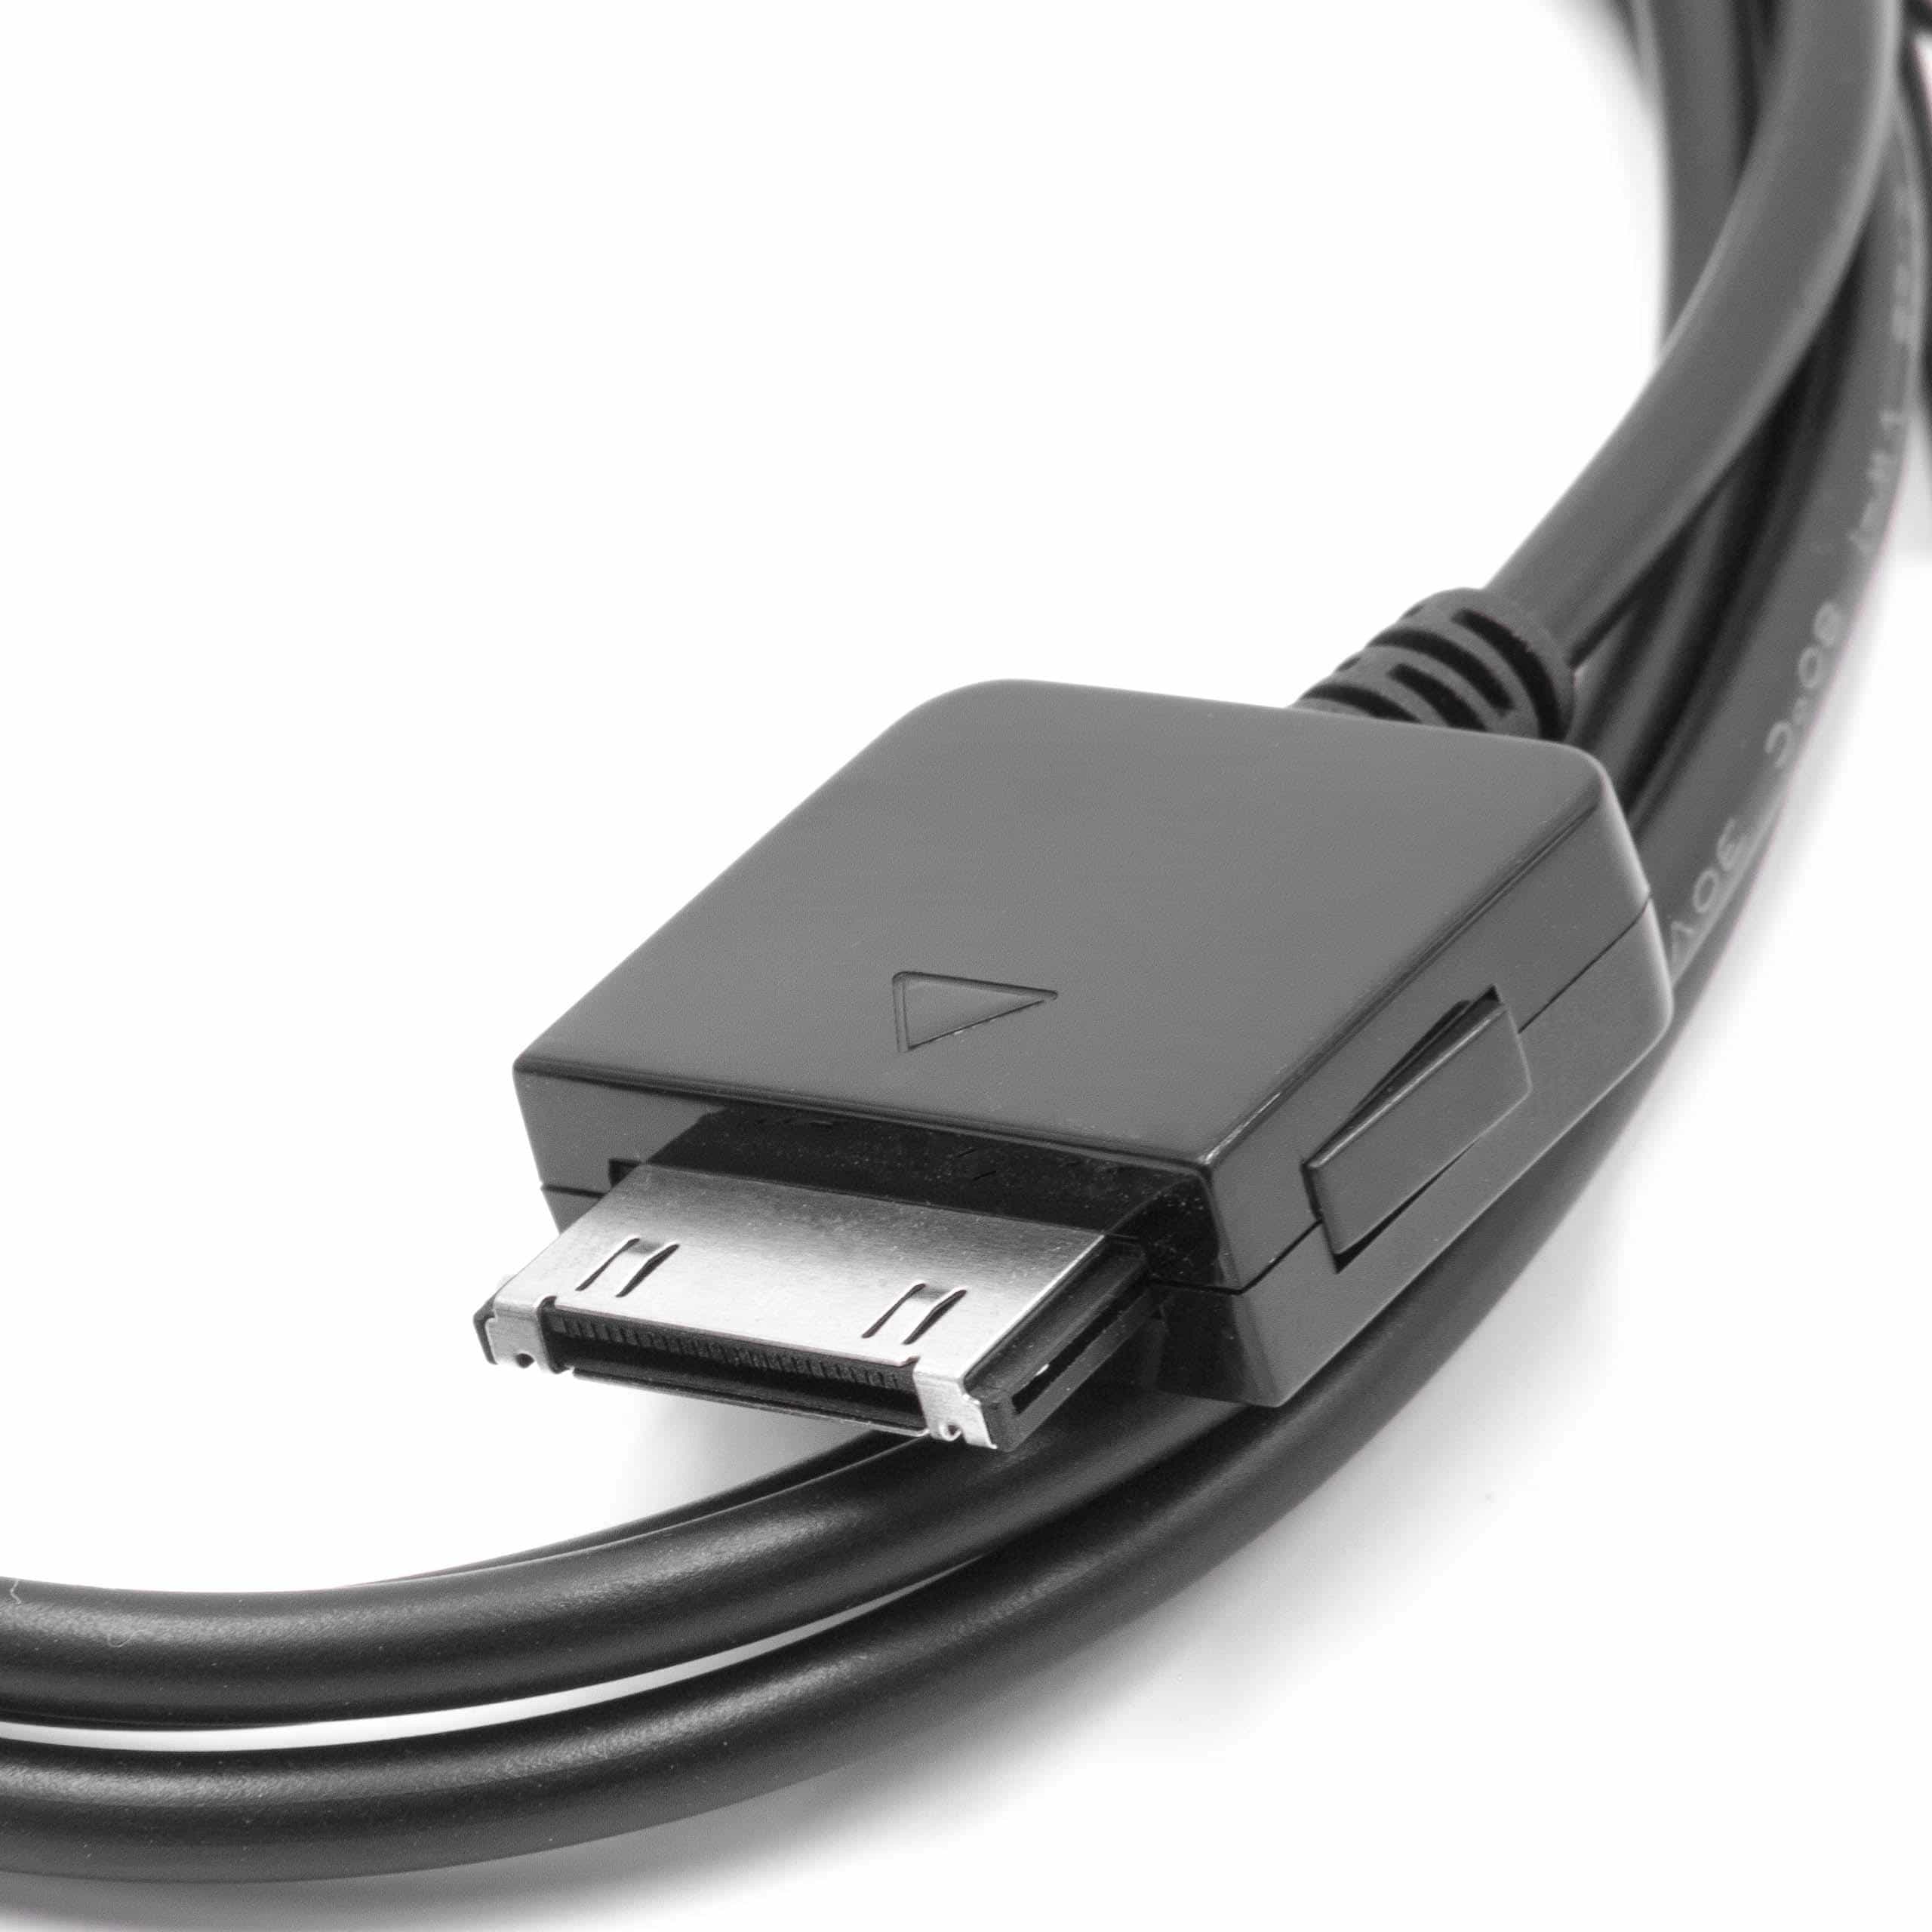 Cable de datos USB Cable de carga compatible con Microsoft Zune, etc., 100 cm